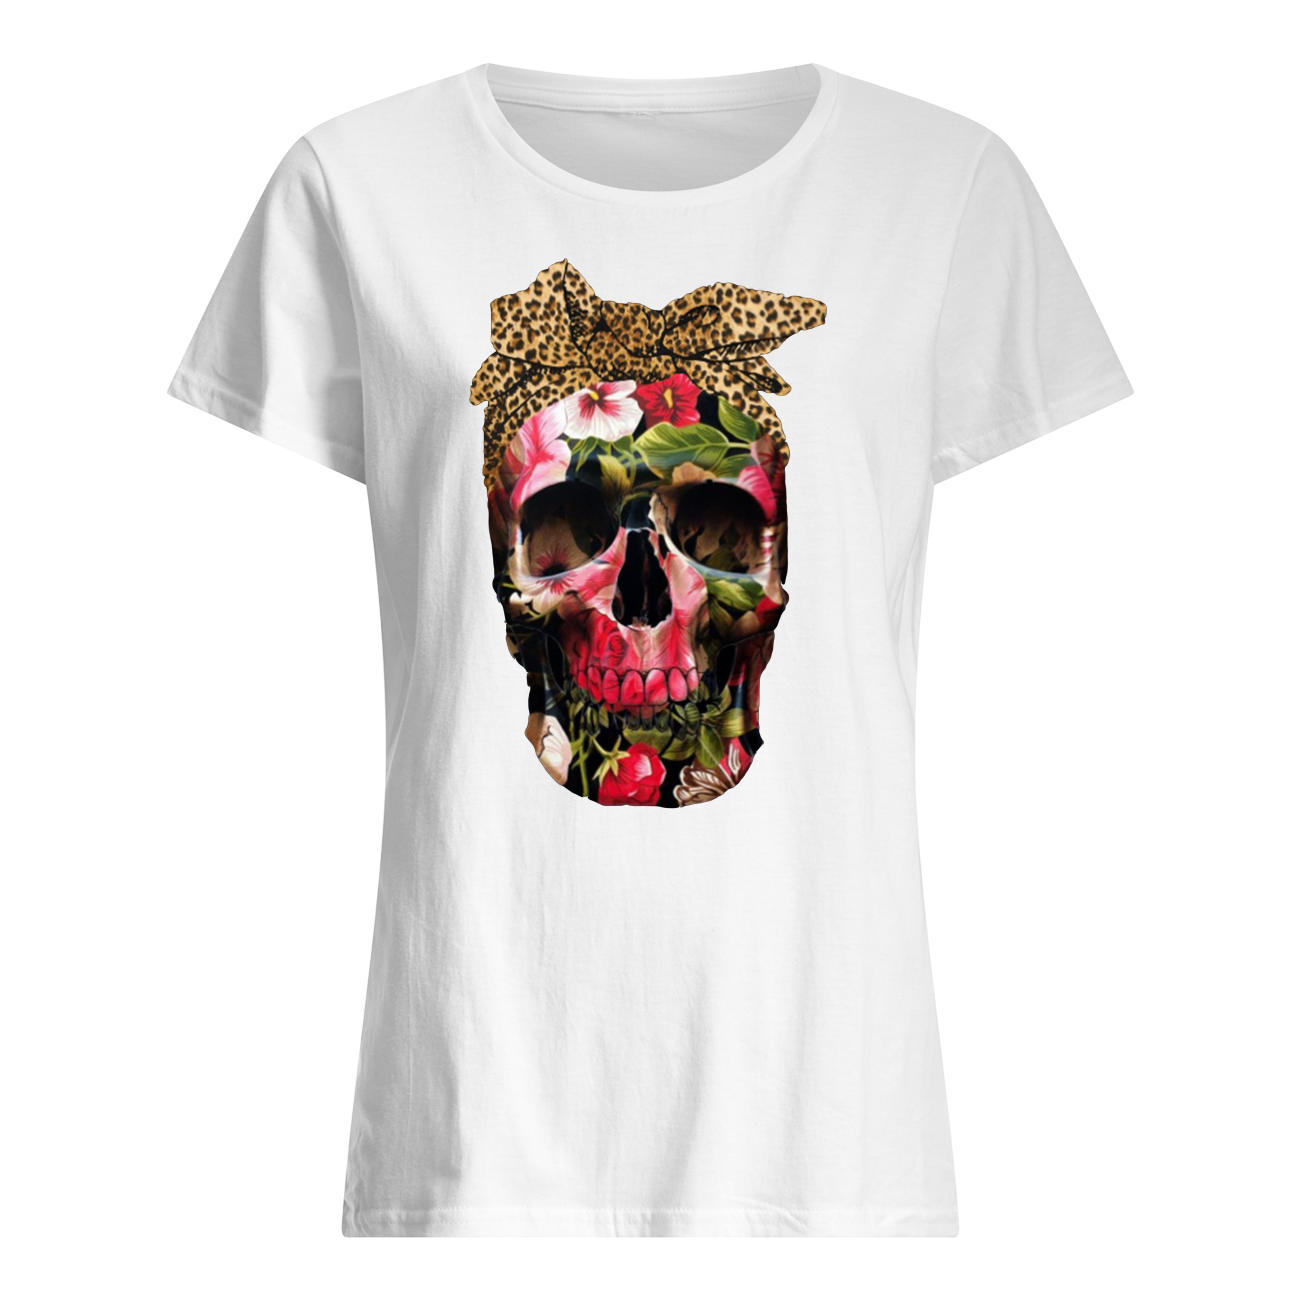 Floral skull leopard womens shirt